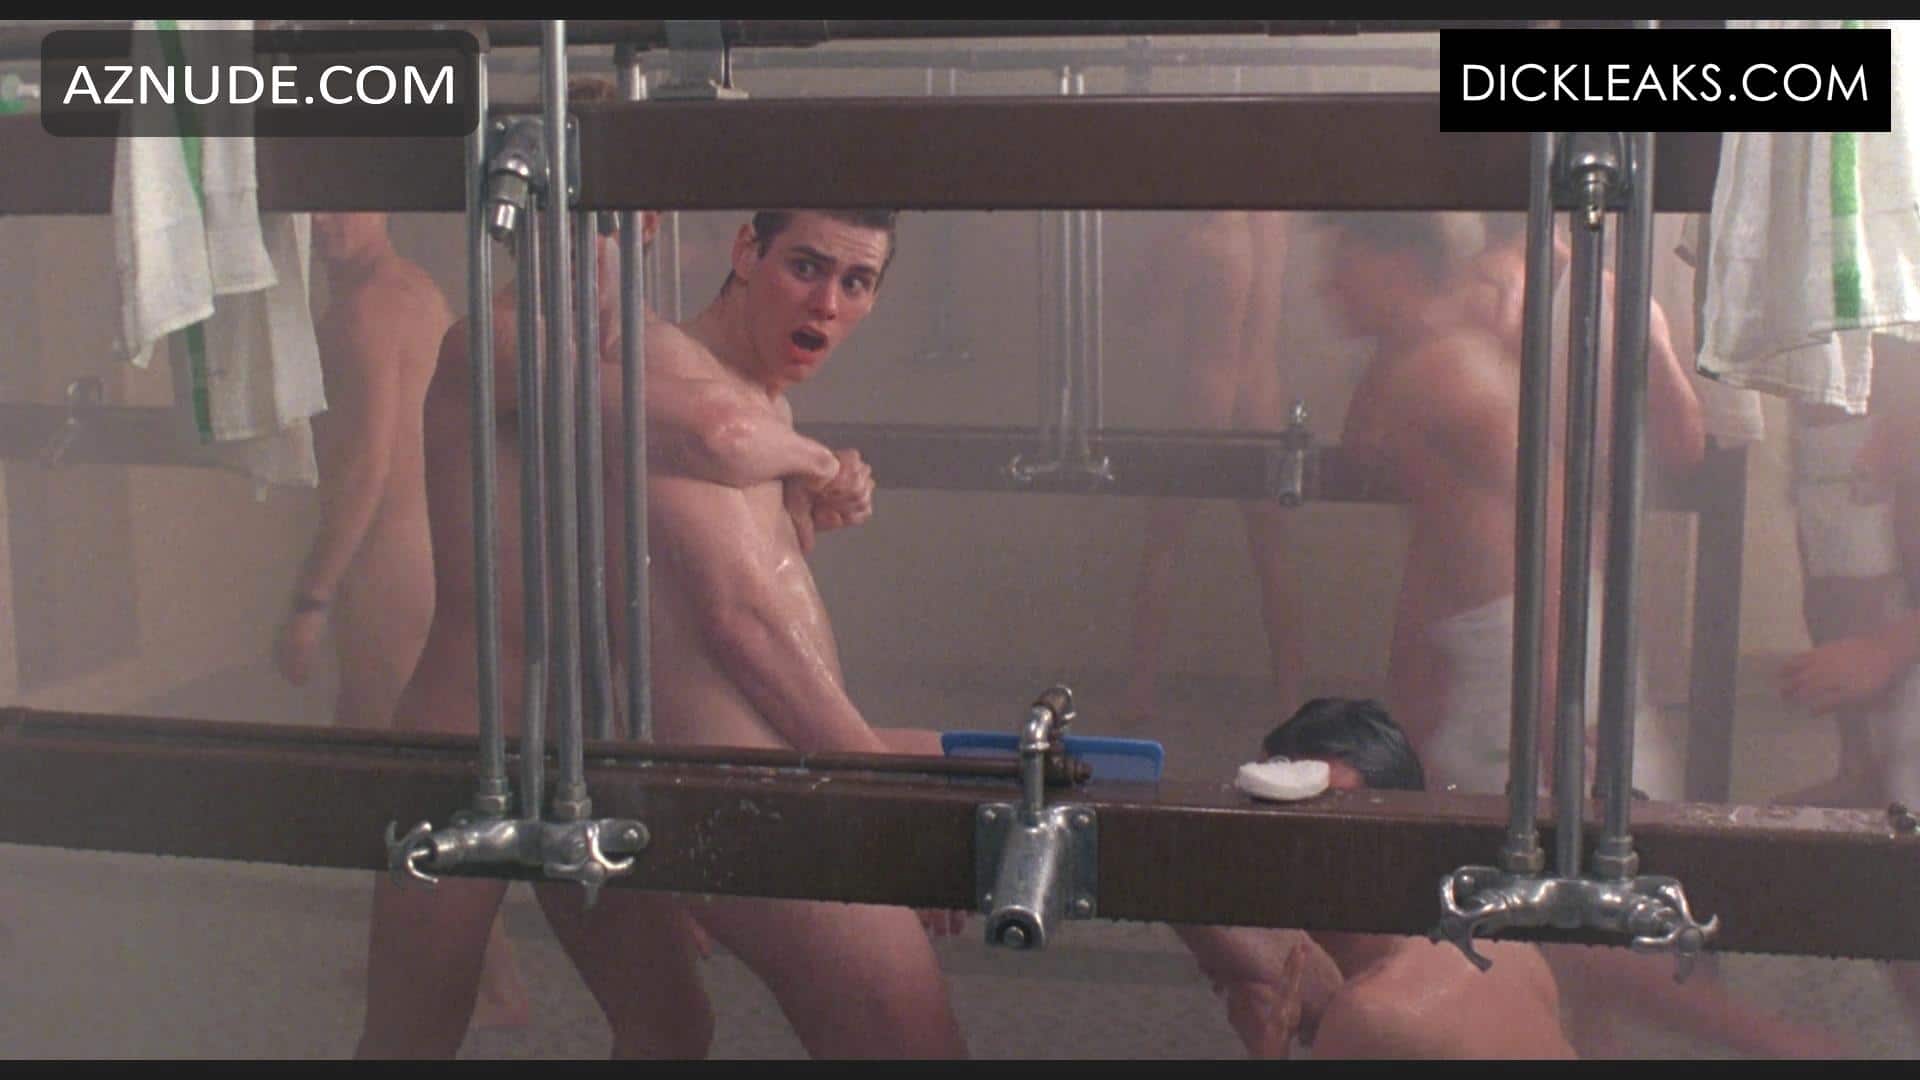 Big Gulps Jim Carrey Nude Photos Sex Scene Video Clips Leaked Men